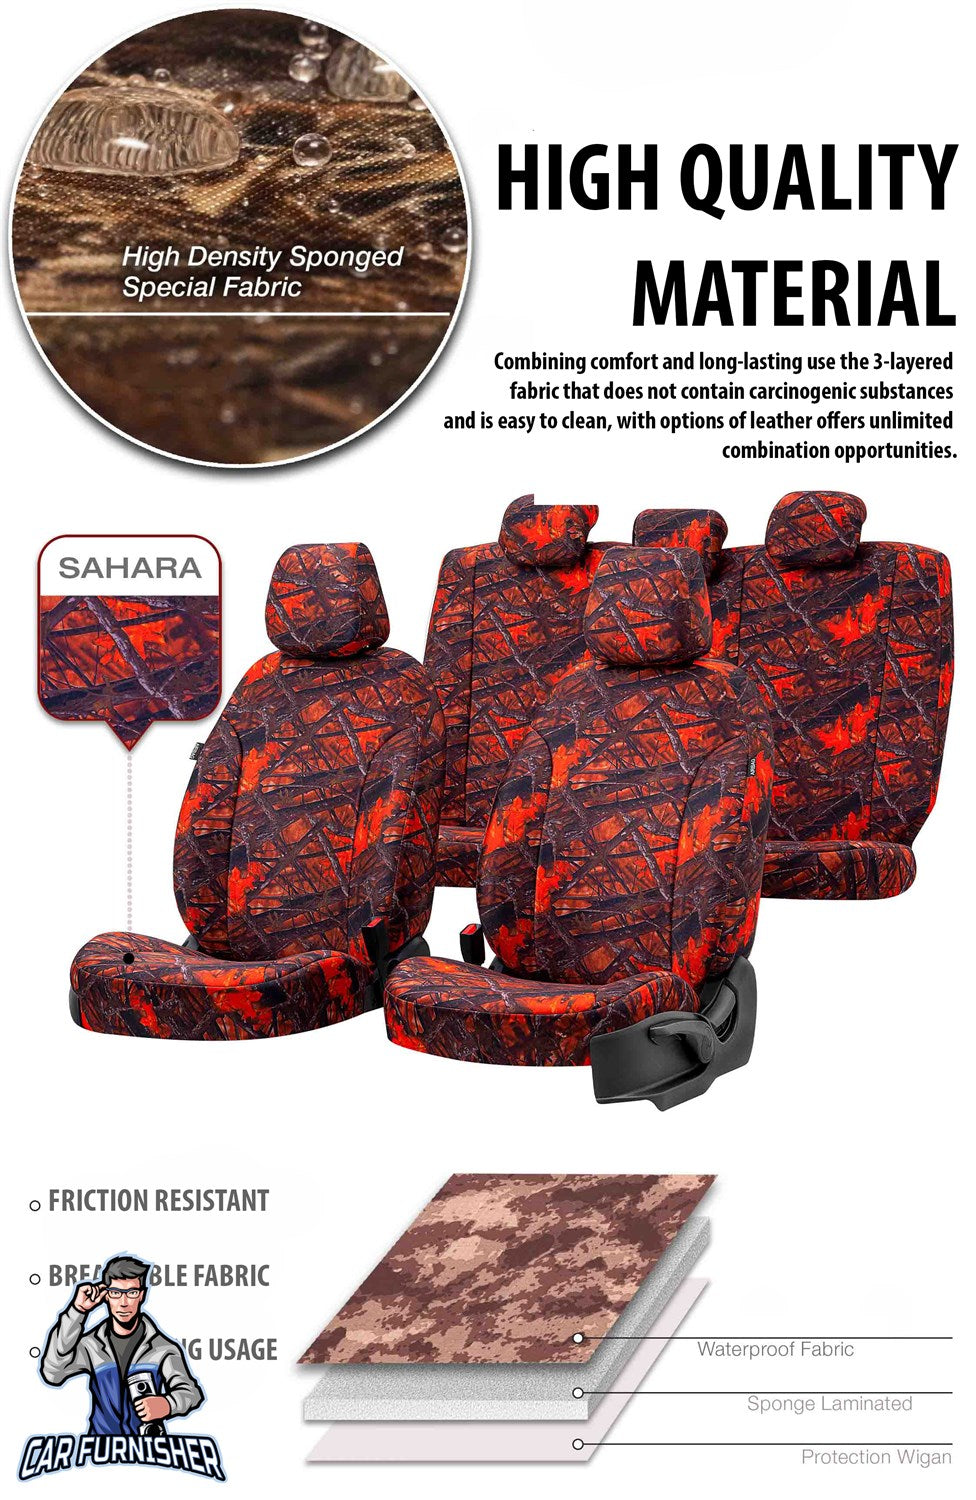 Daihatsu Materia Seat Covers Camouflage Waterproof Design Mojave Camo Waterproof Fabric